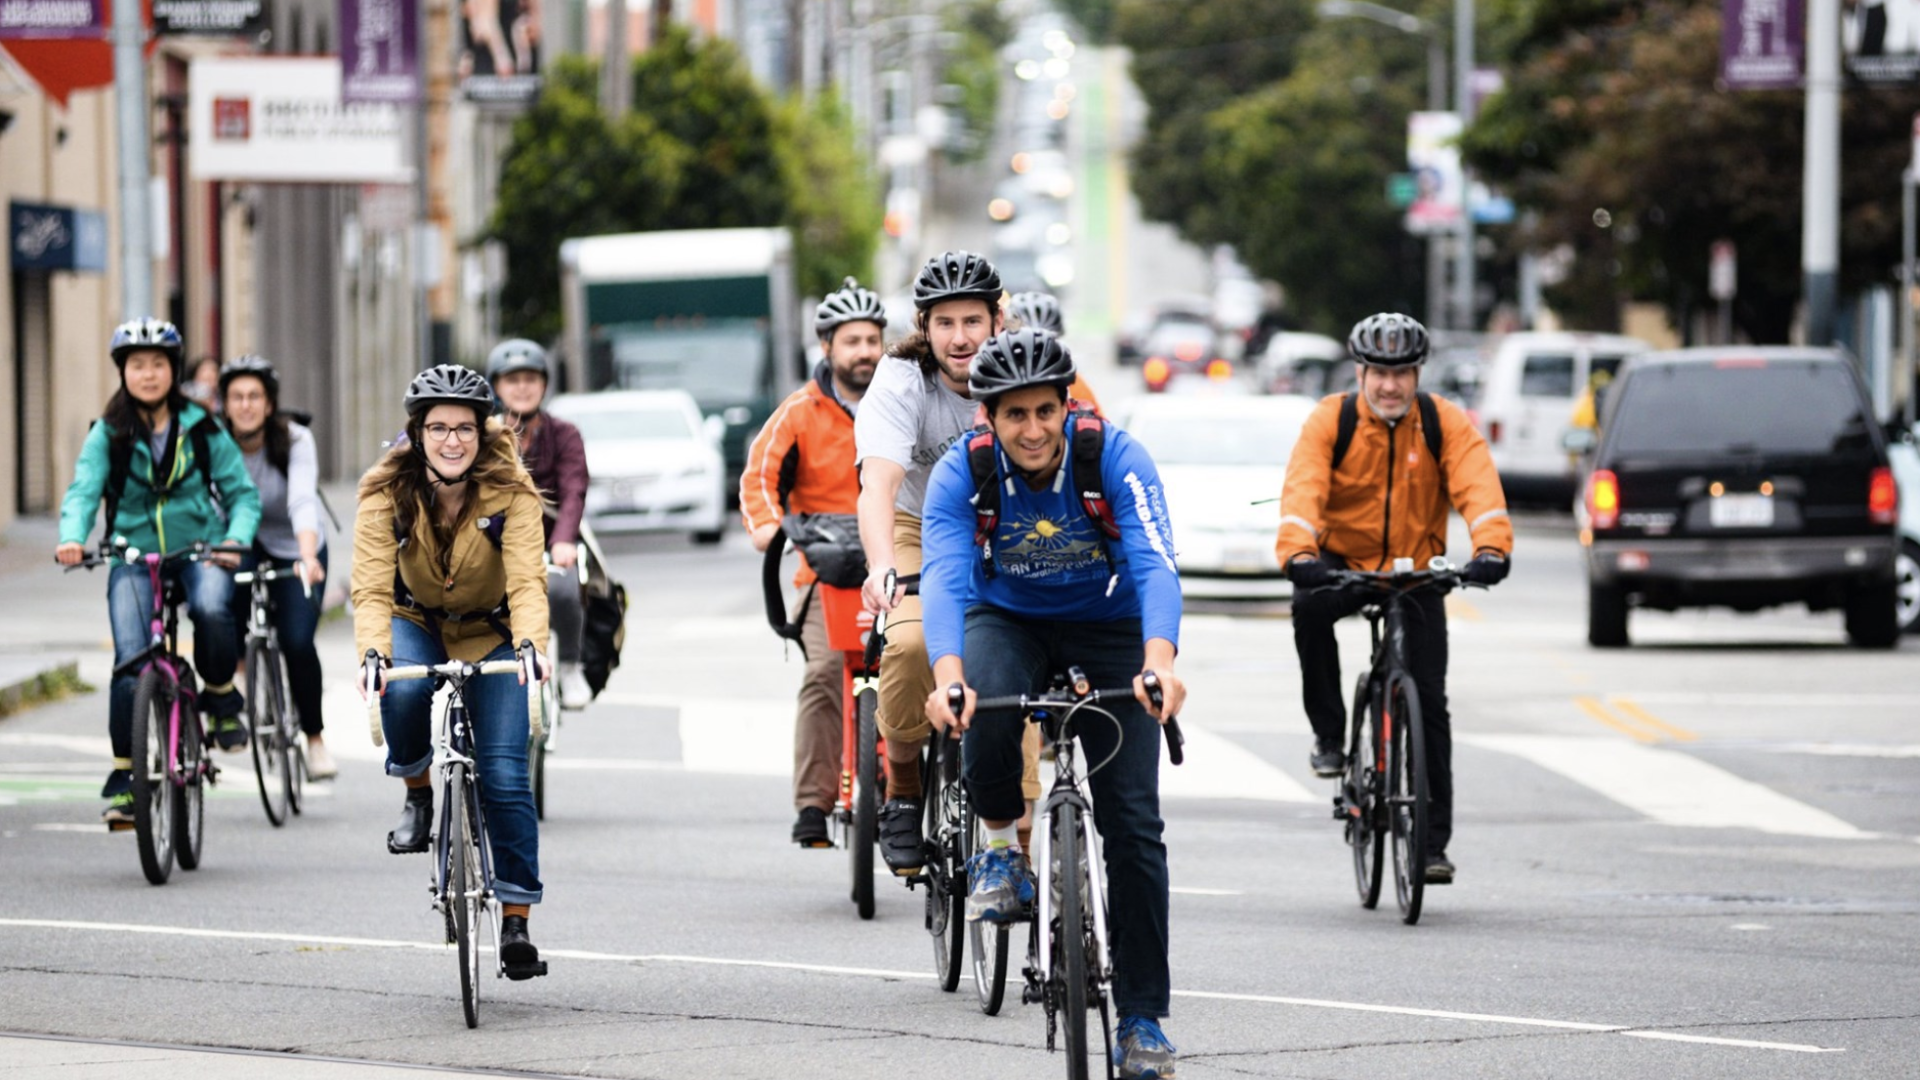 commuters biking through street intersection